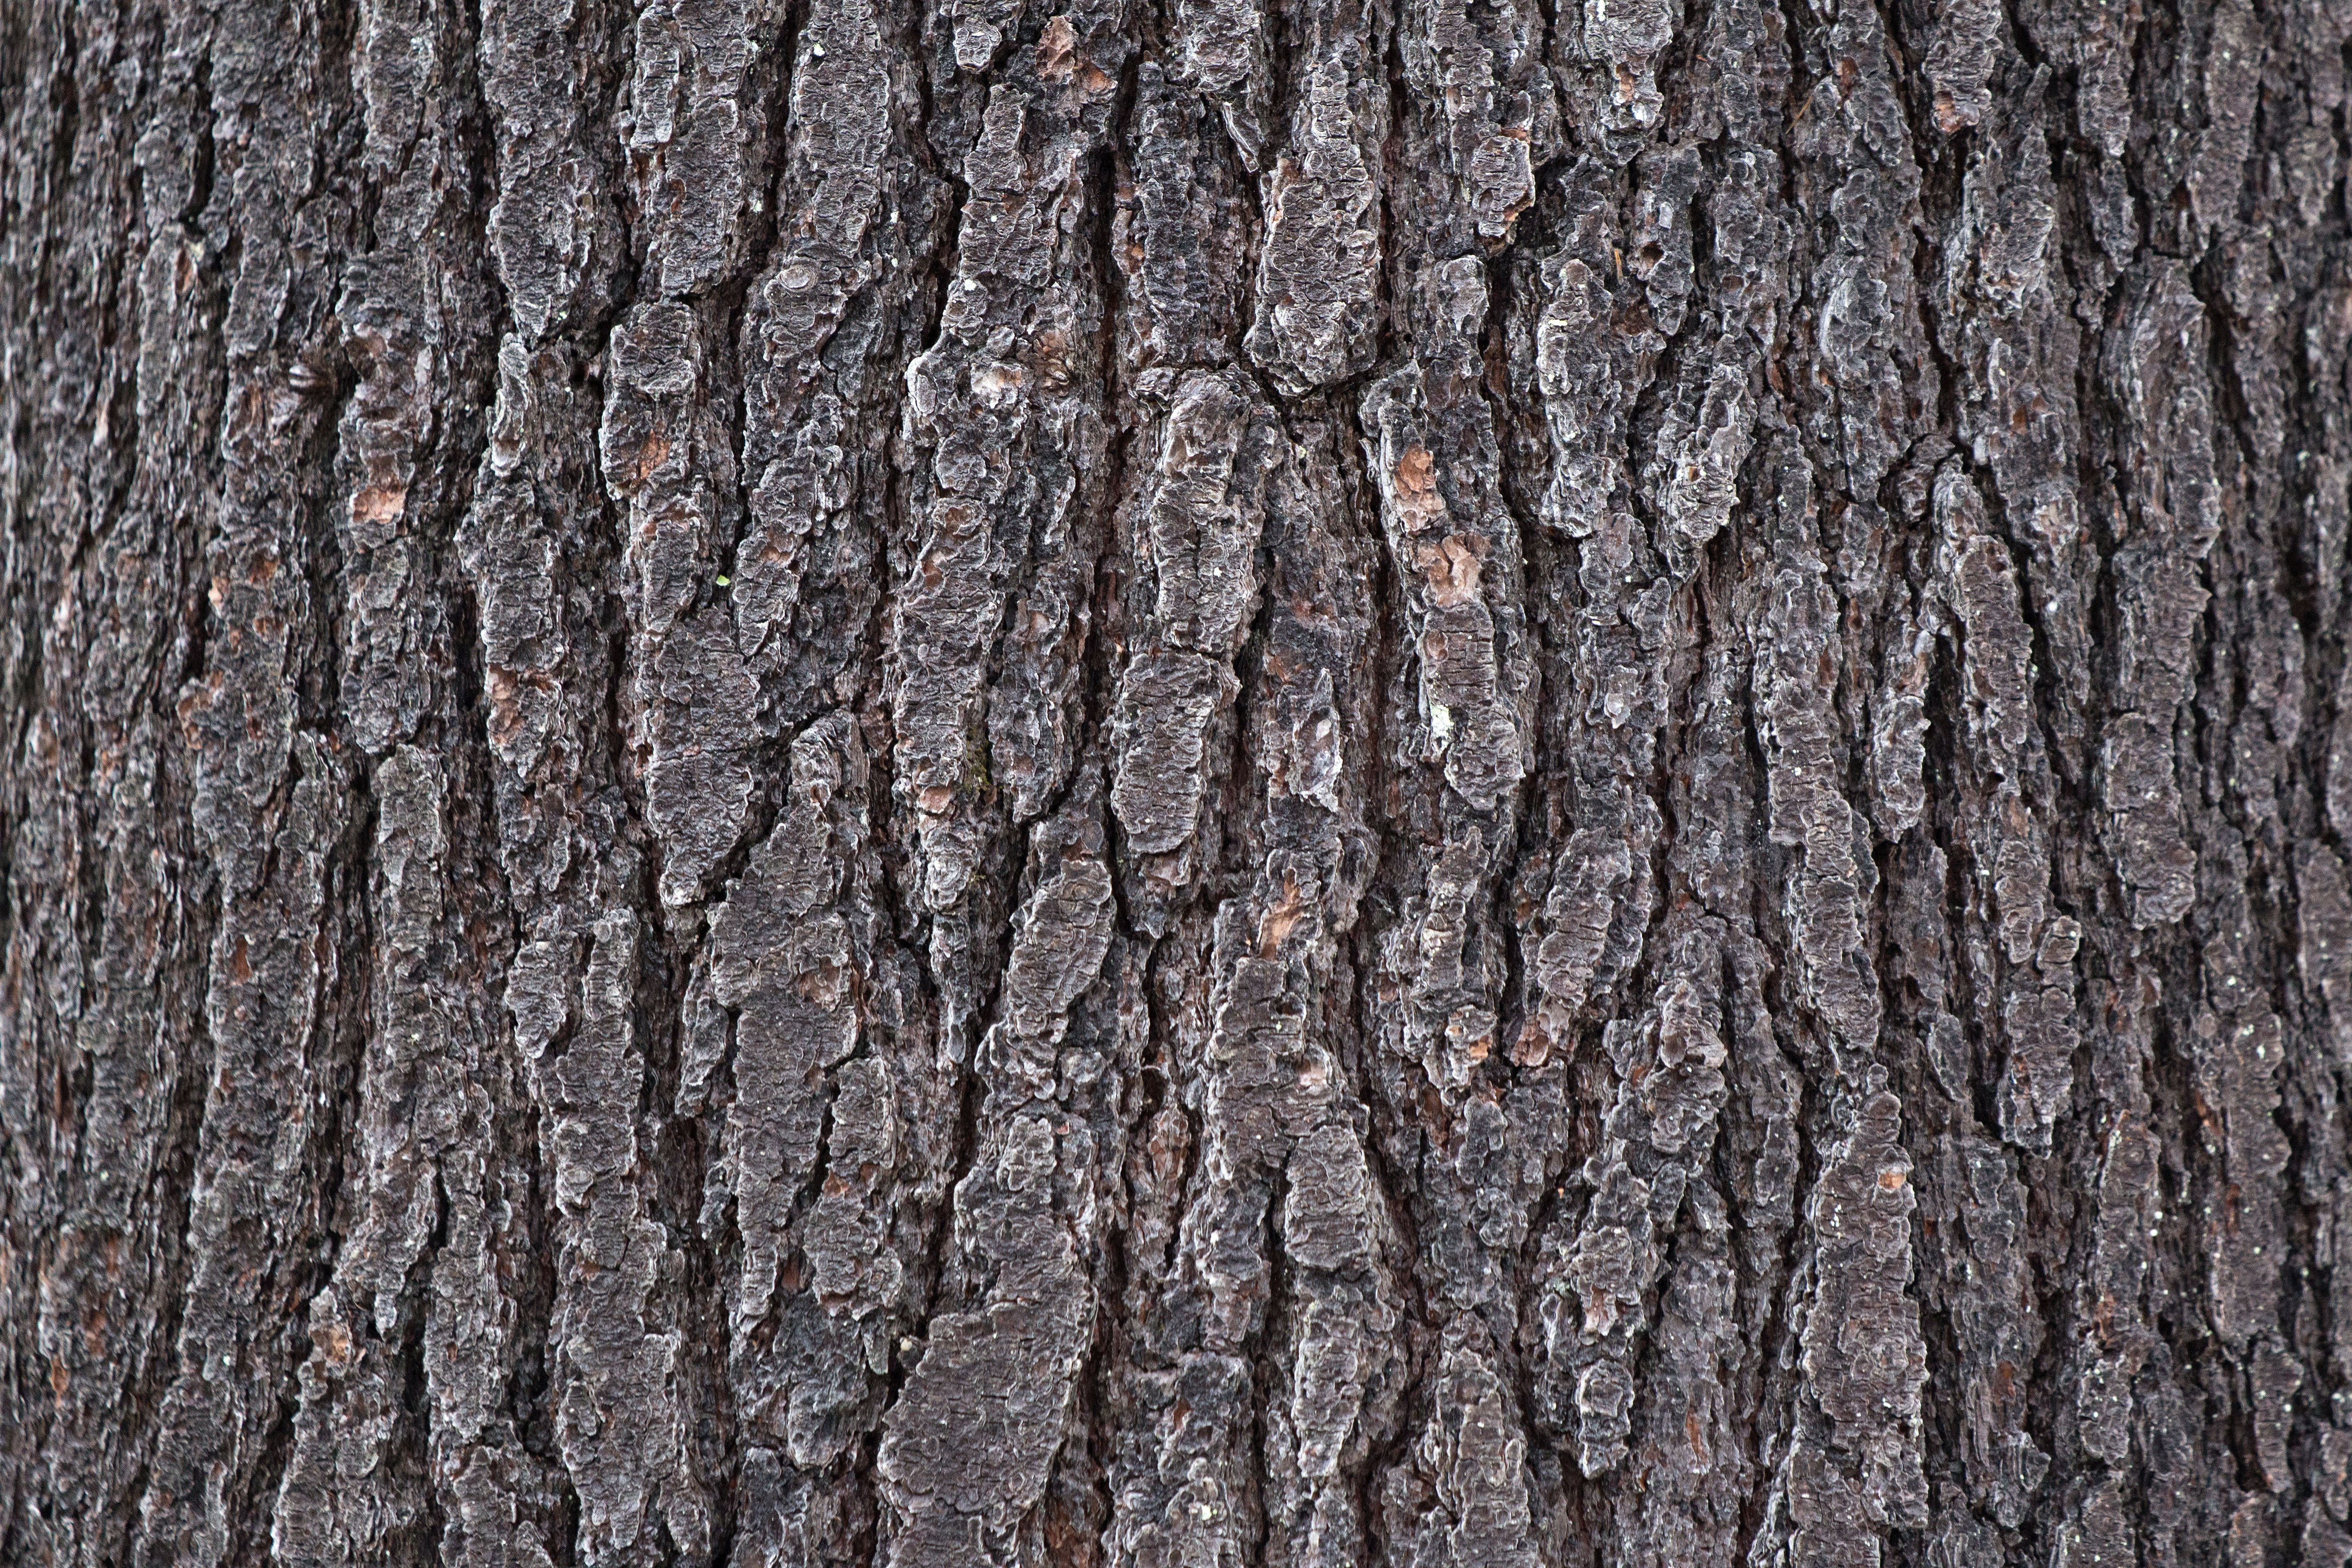 Free stock photo of bark, nature, texture